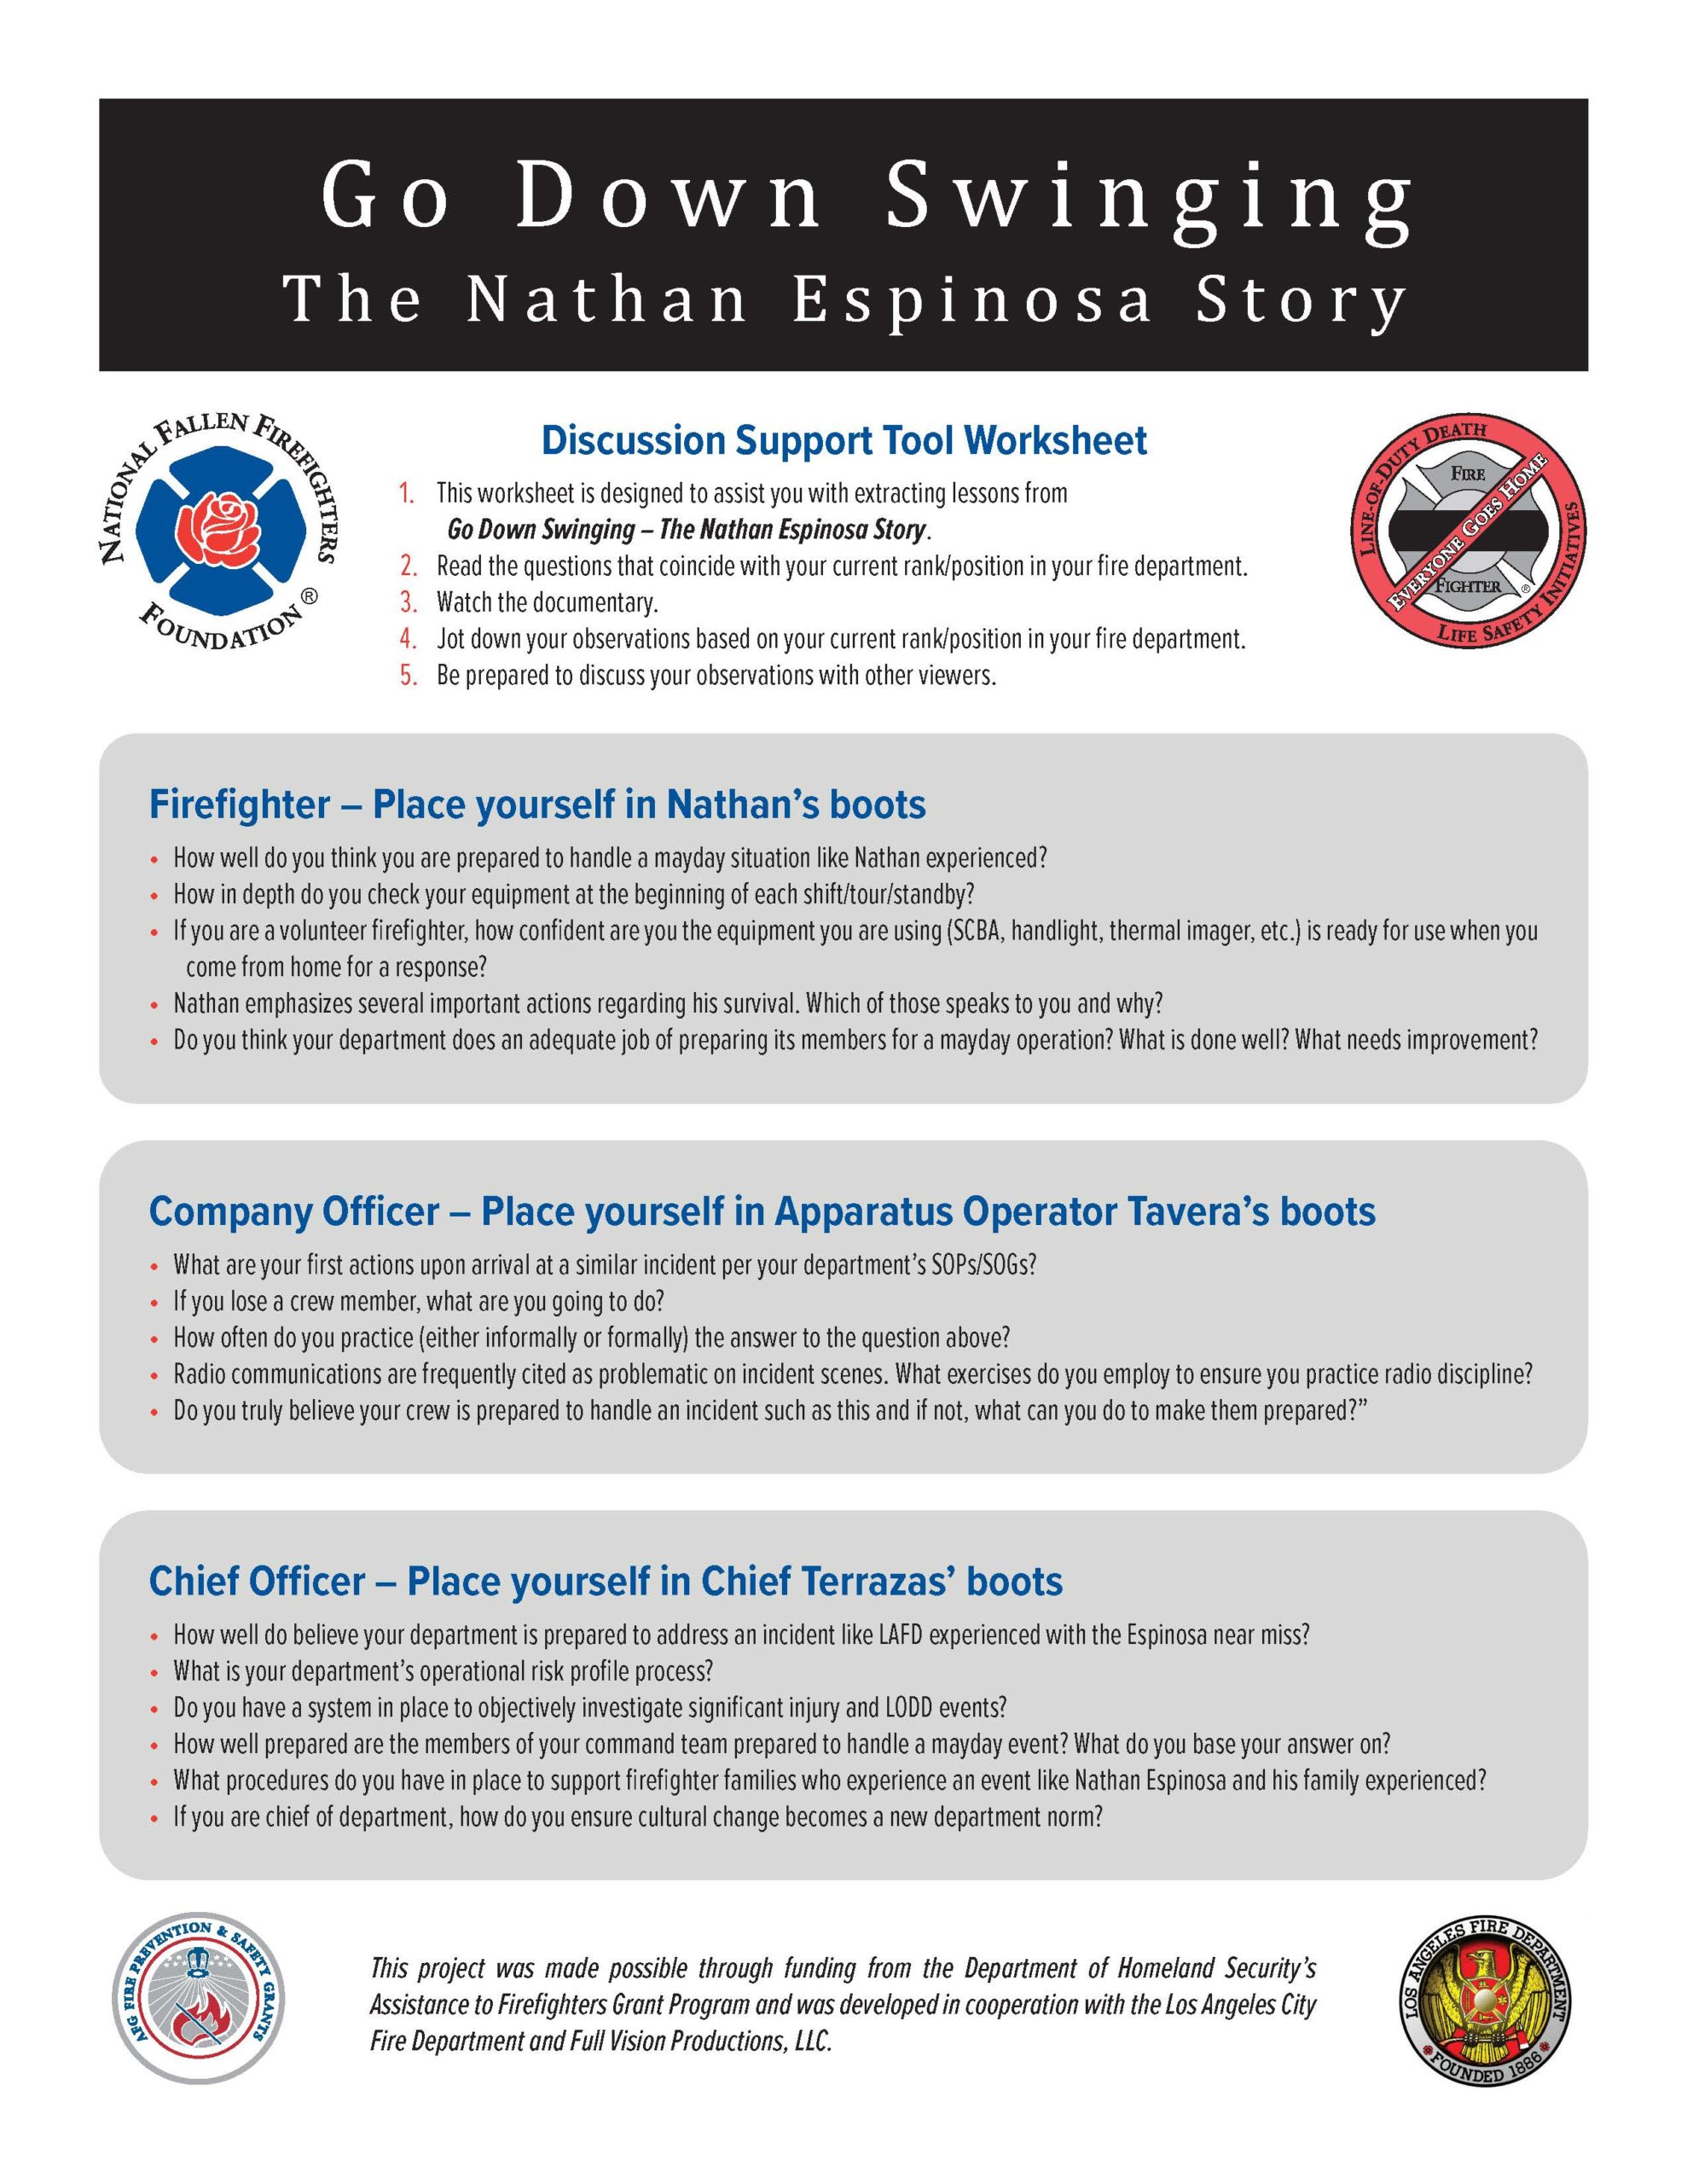 Go Down Swinging - The Nathan Espinosa Story Worksheet